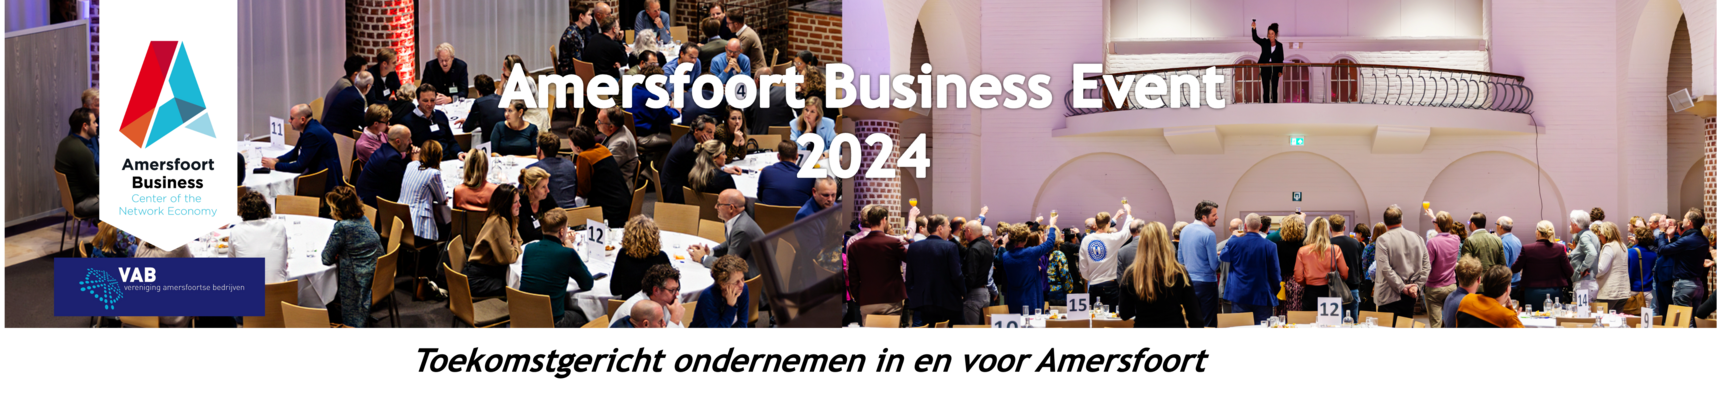 Amersfoort Business Event